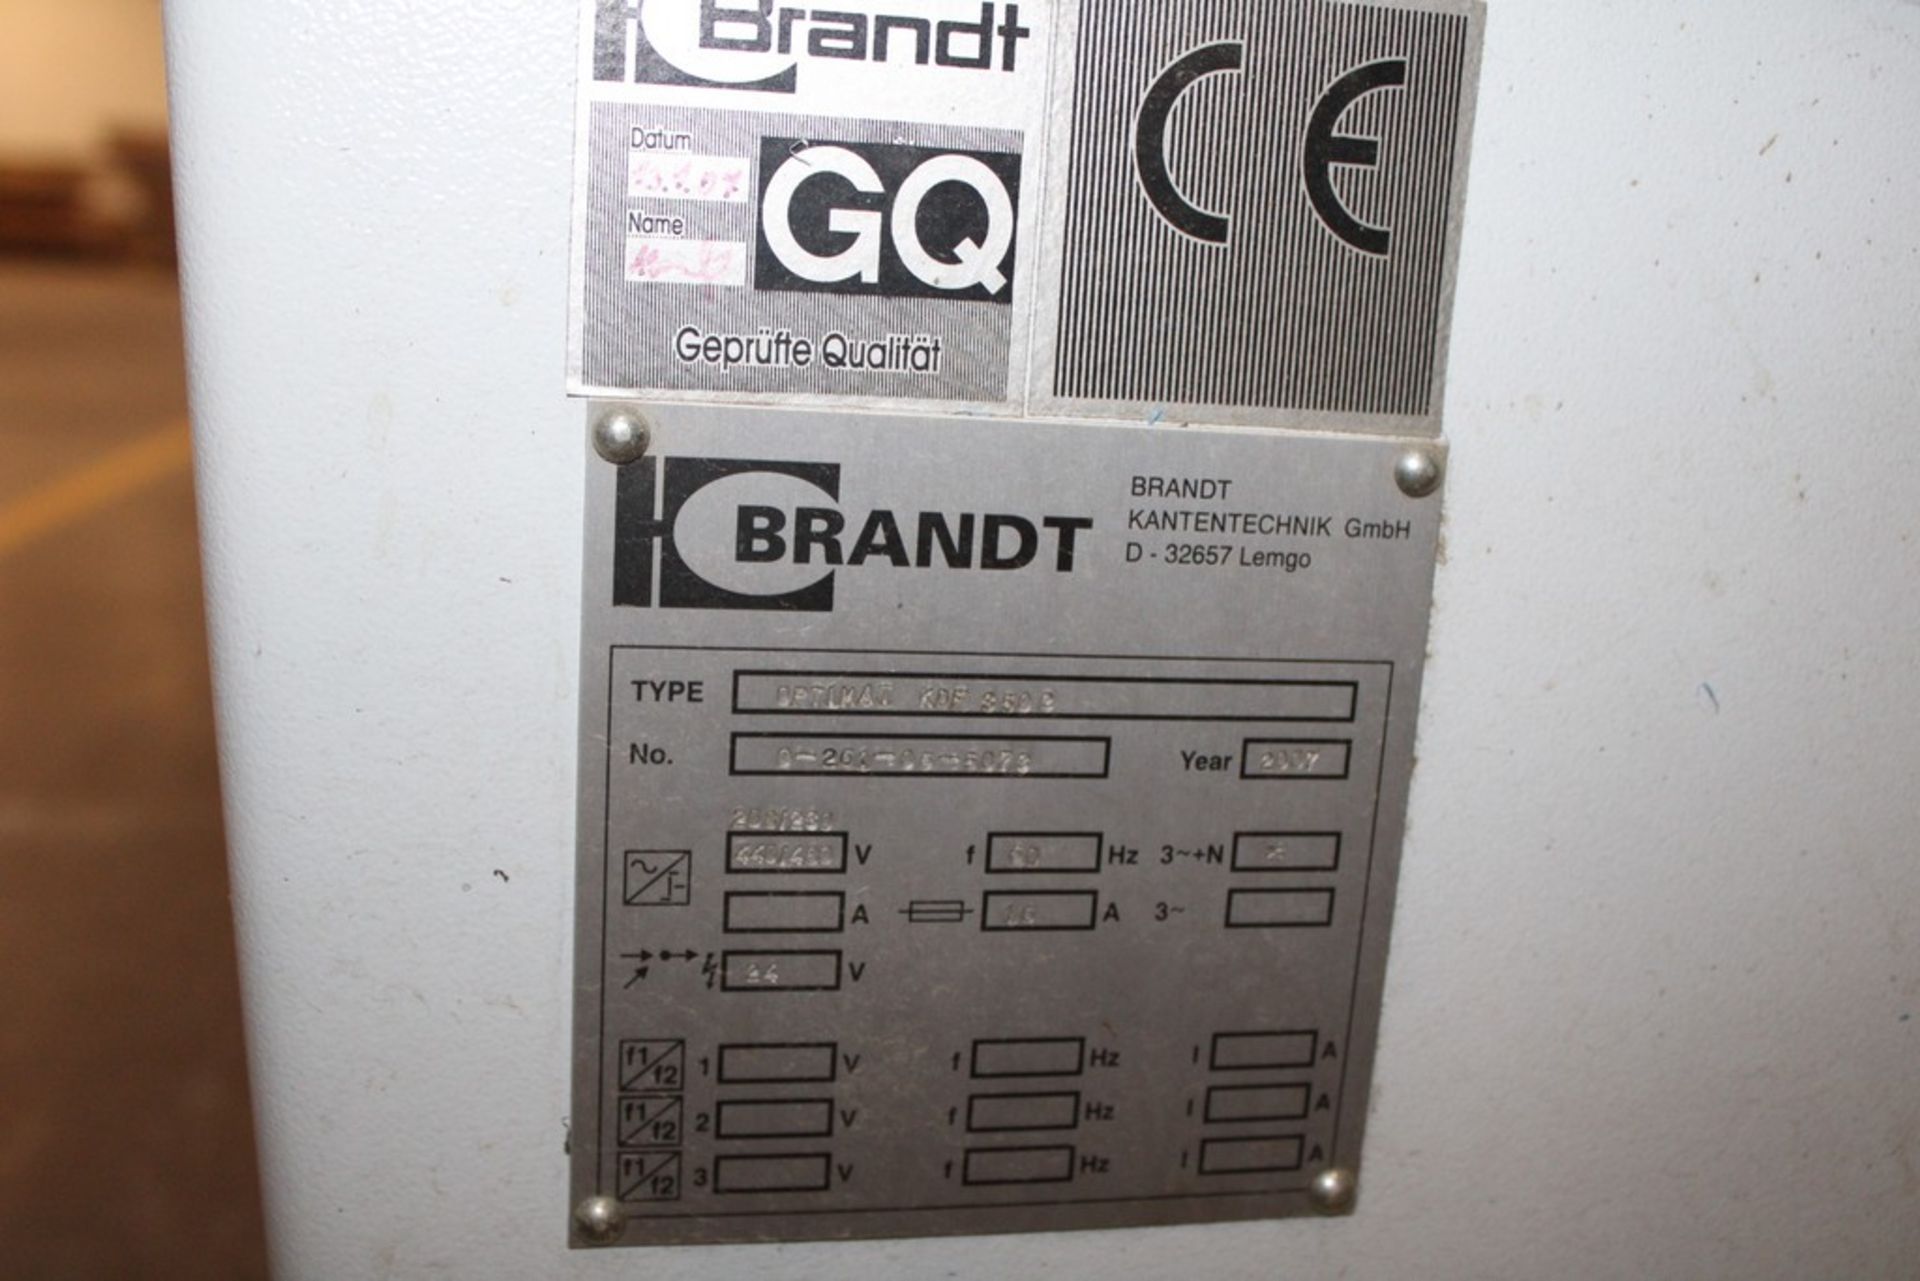 BRANDT MODEL OPTIMAT KDF-350 EDGE BANDING MACHINE, S/N 0-261-06-5073 WITH MICROPROCESSOR - Image 7 of 8